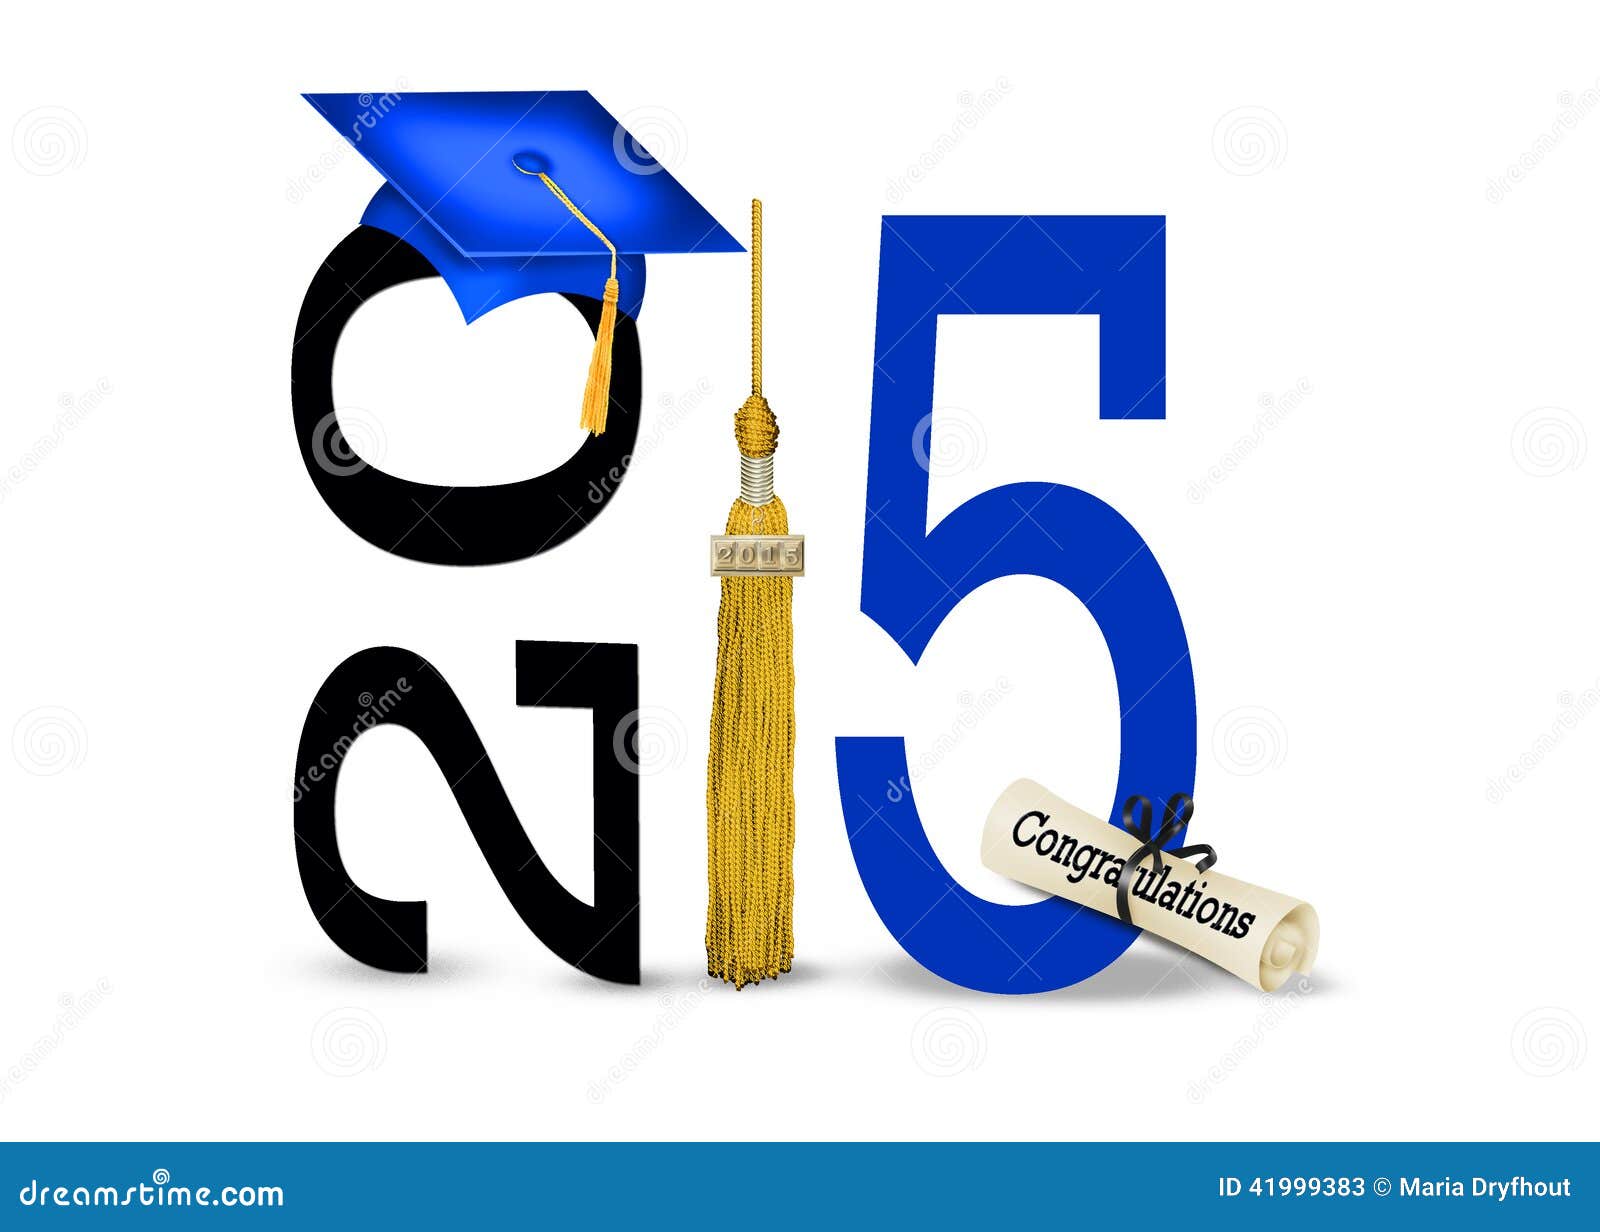 graduation images clipart 2015 free - photo #27